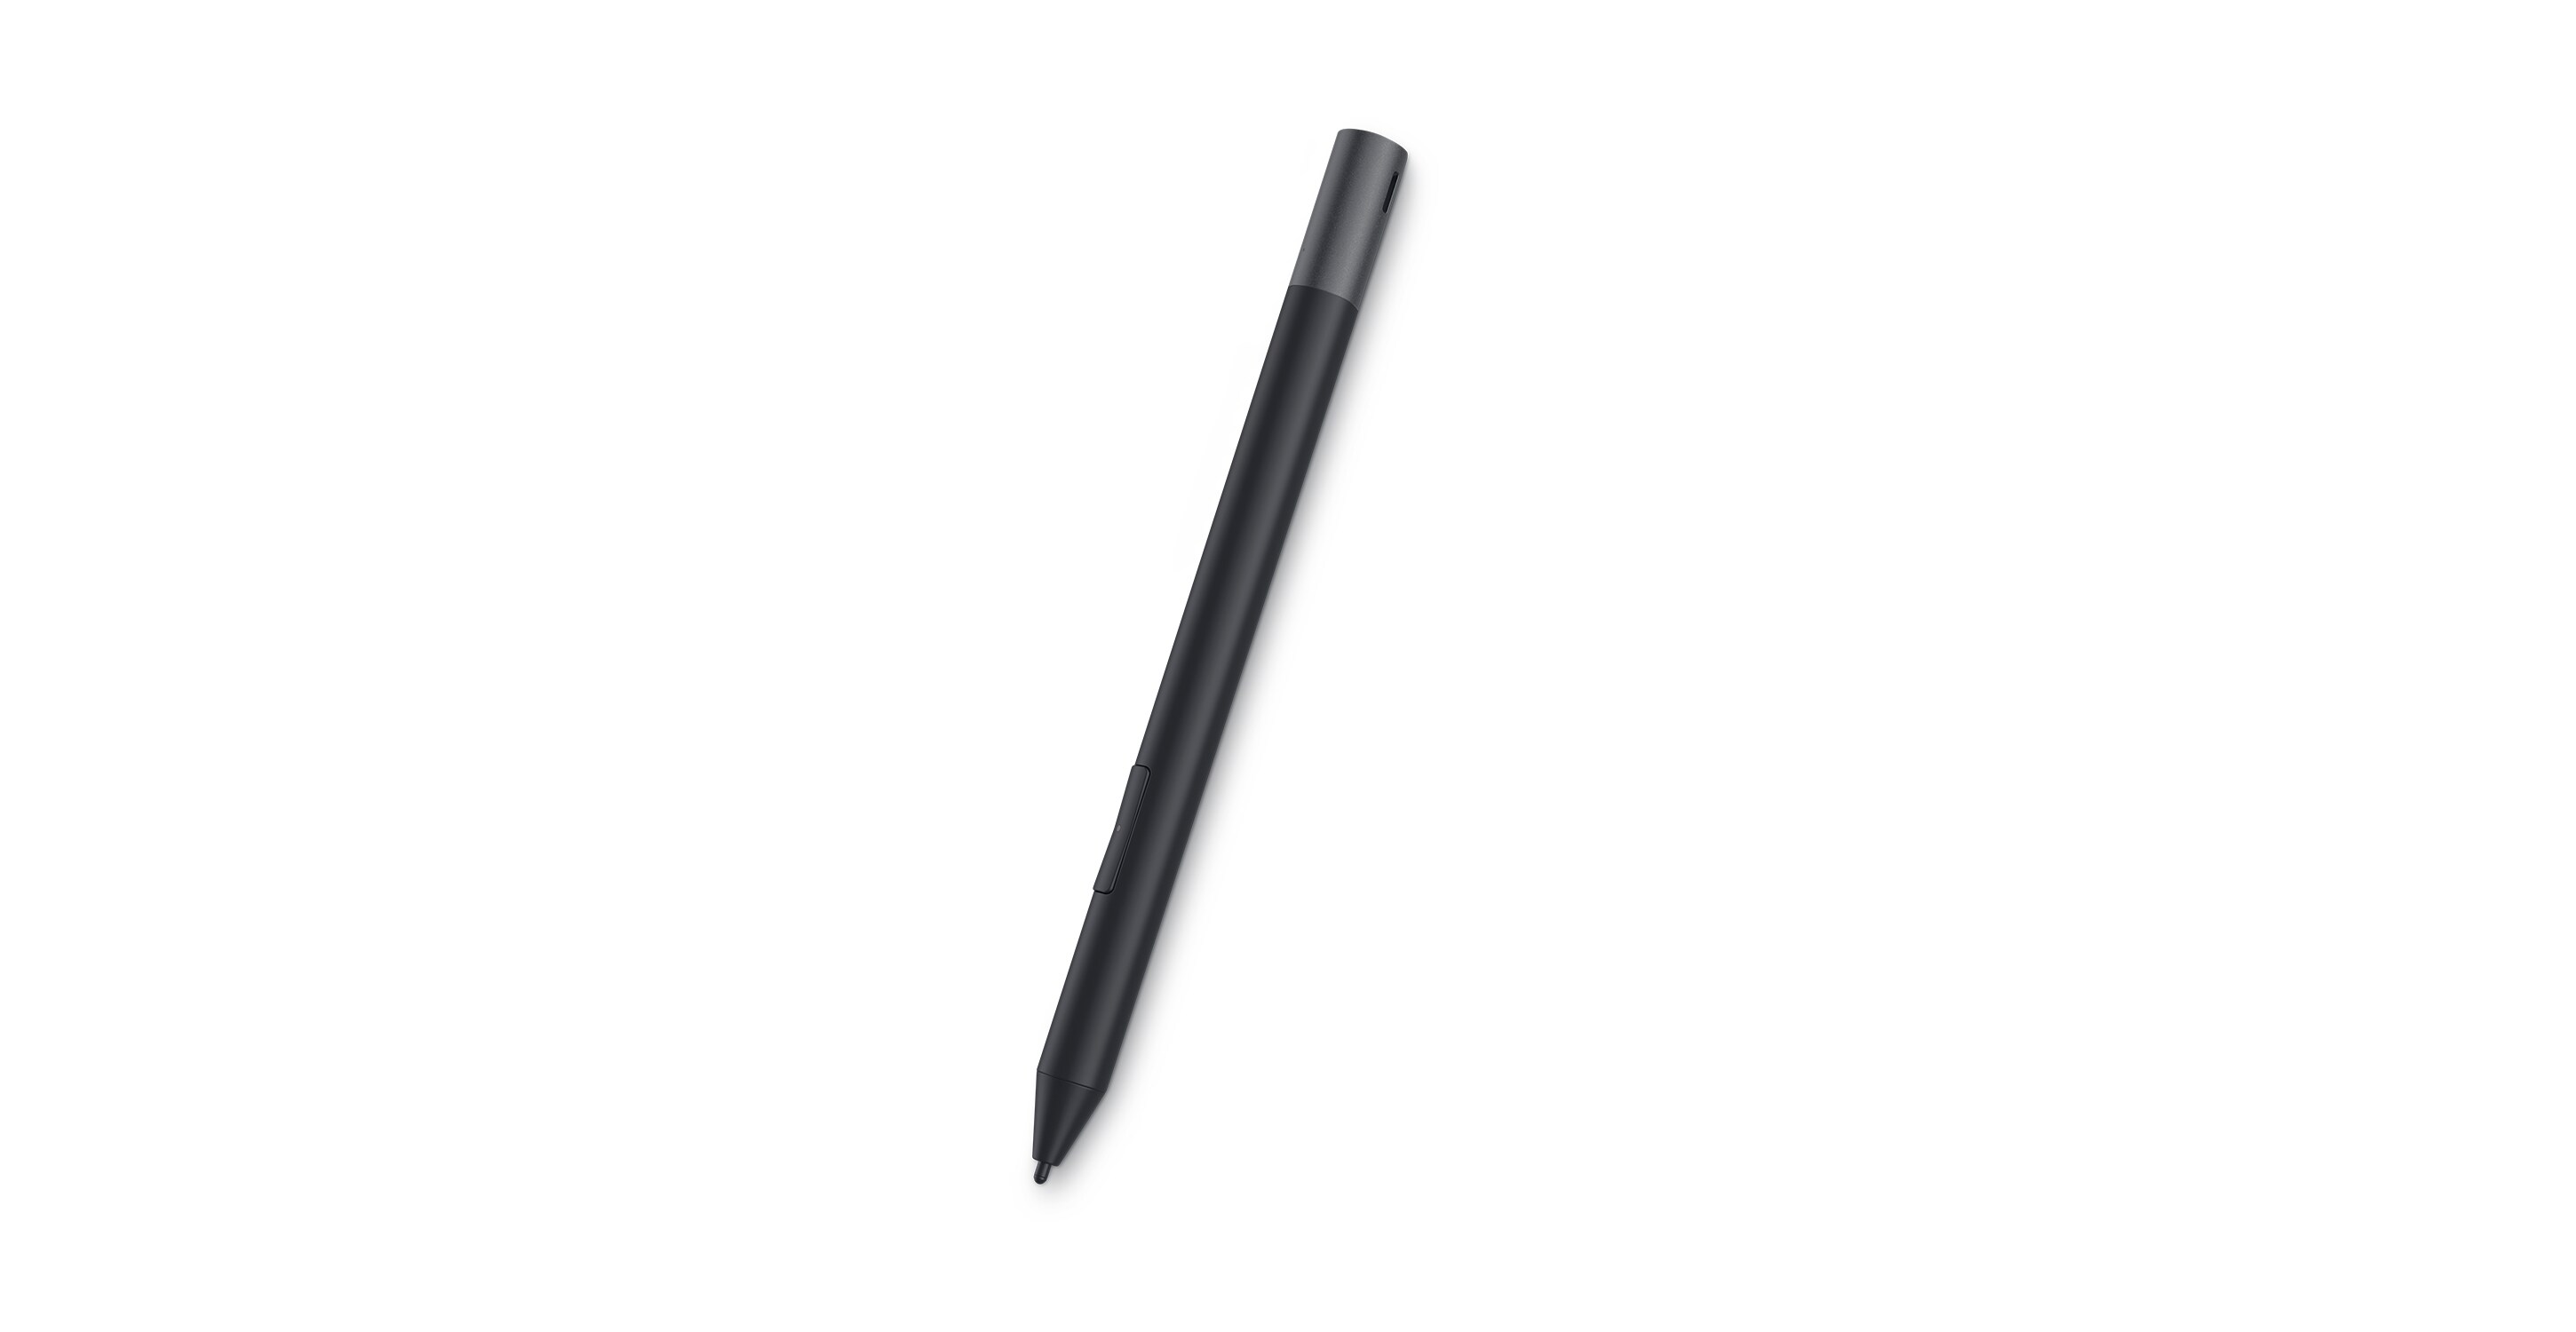 Dell Premium Active Pen - PN579X